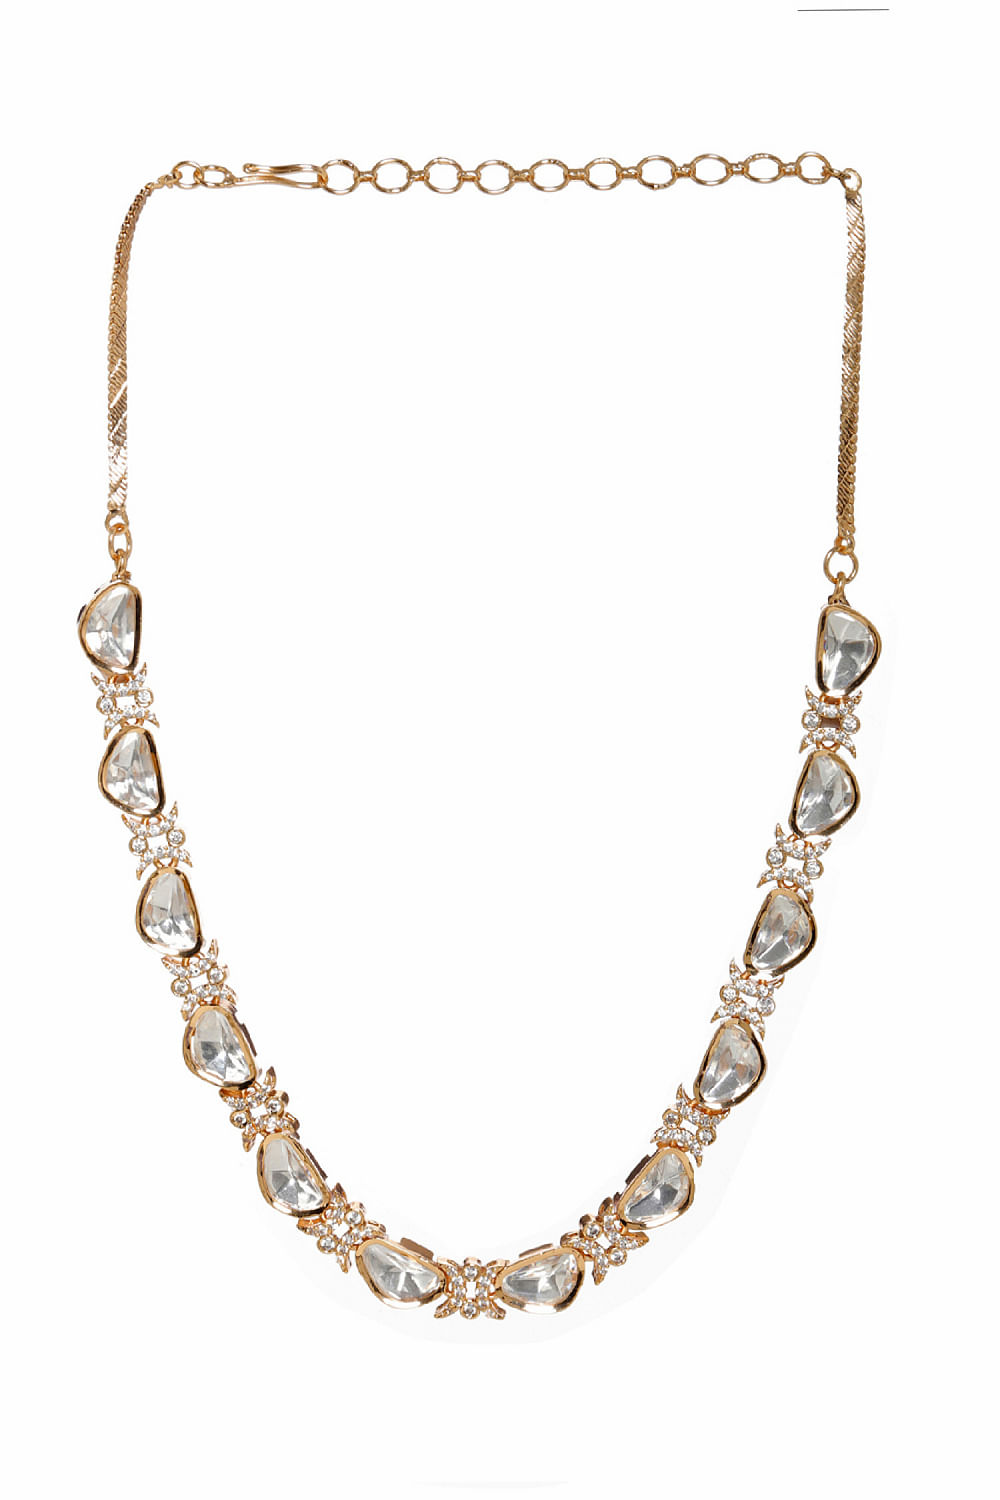 Buy Gold American diamond and kundan necklace by Ruby Raang at Aashni ...